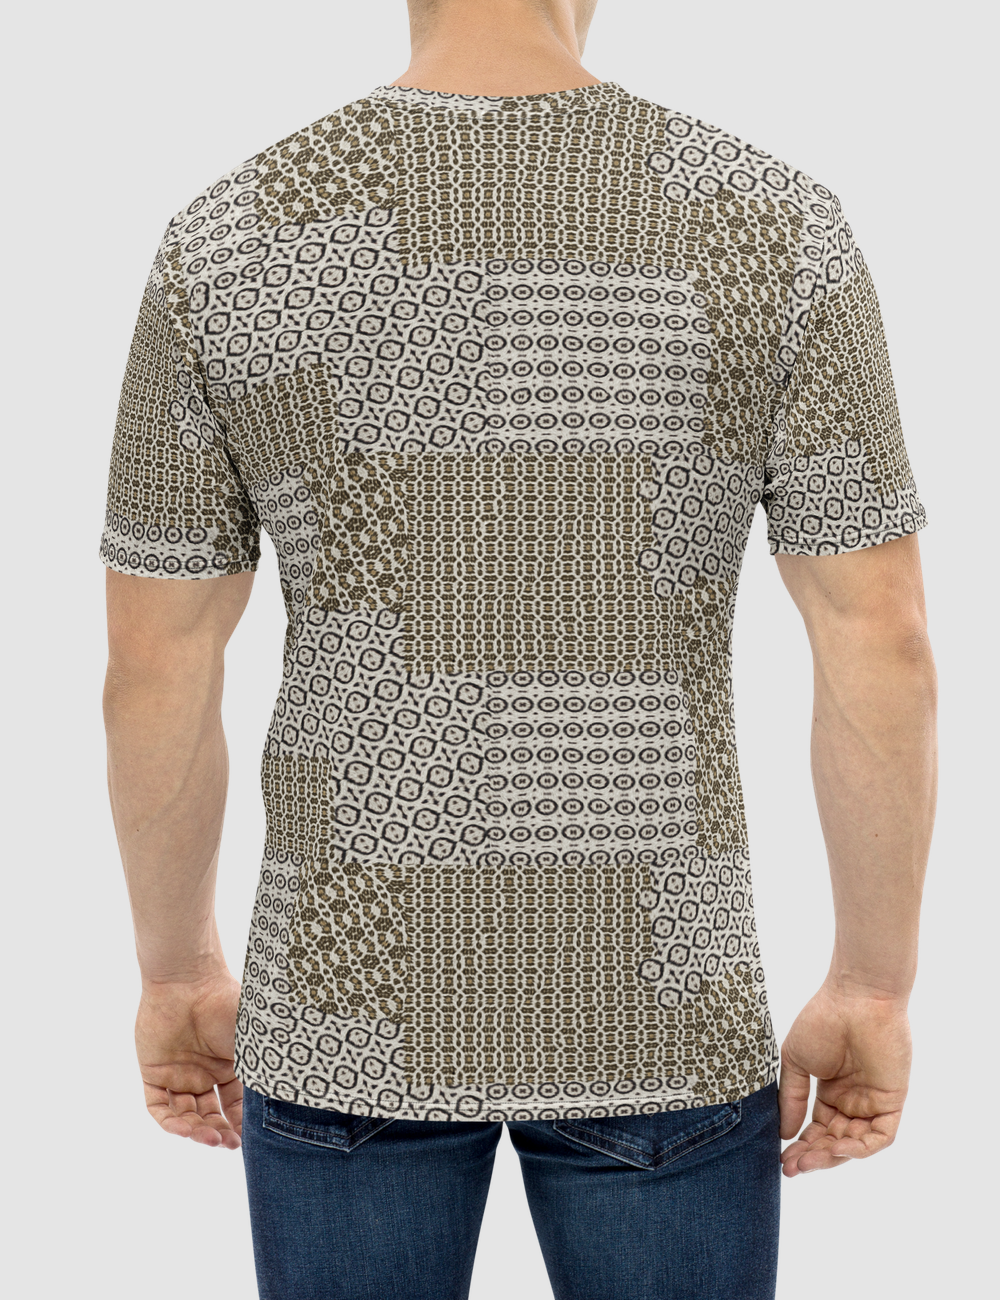 Abstract Geometric Leopard Print Men's Sublimated T-Shirt OniTakai